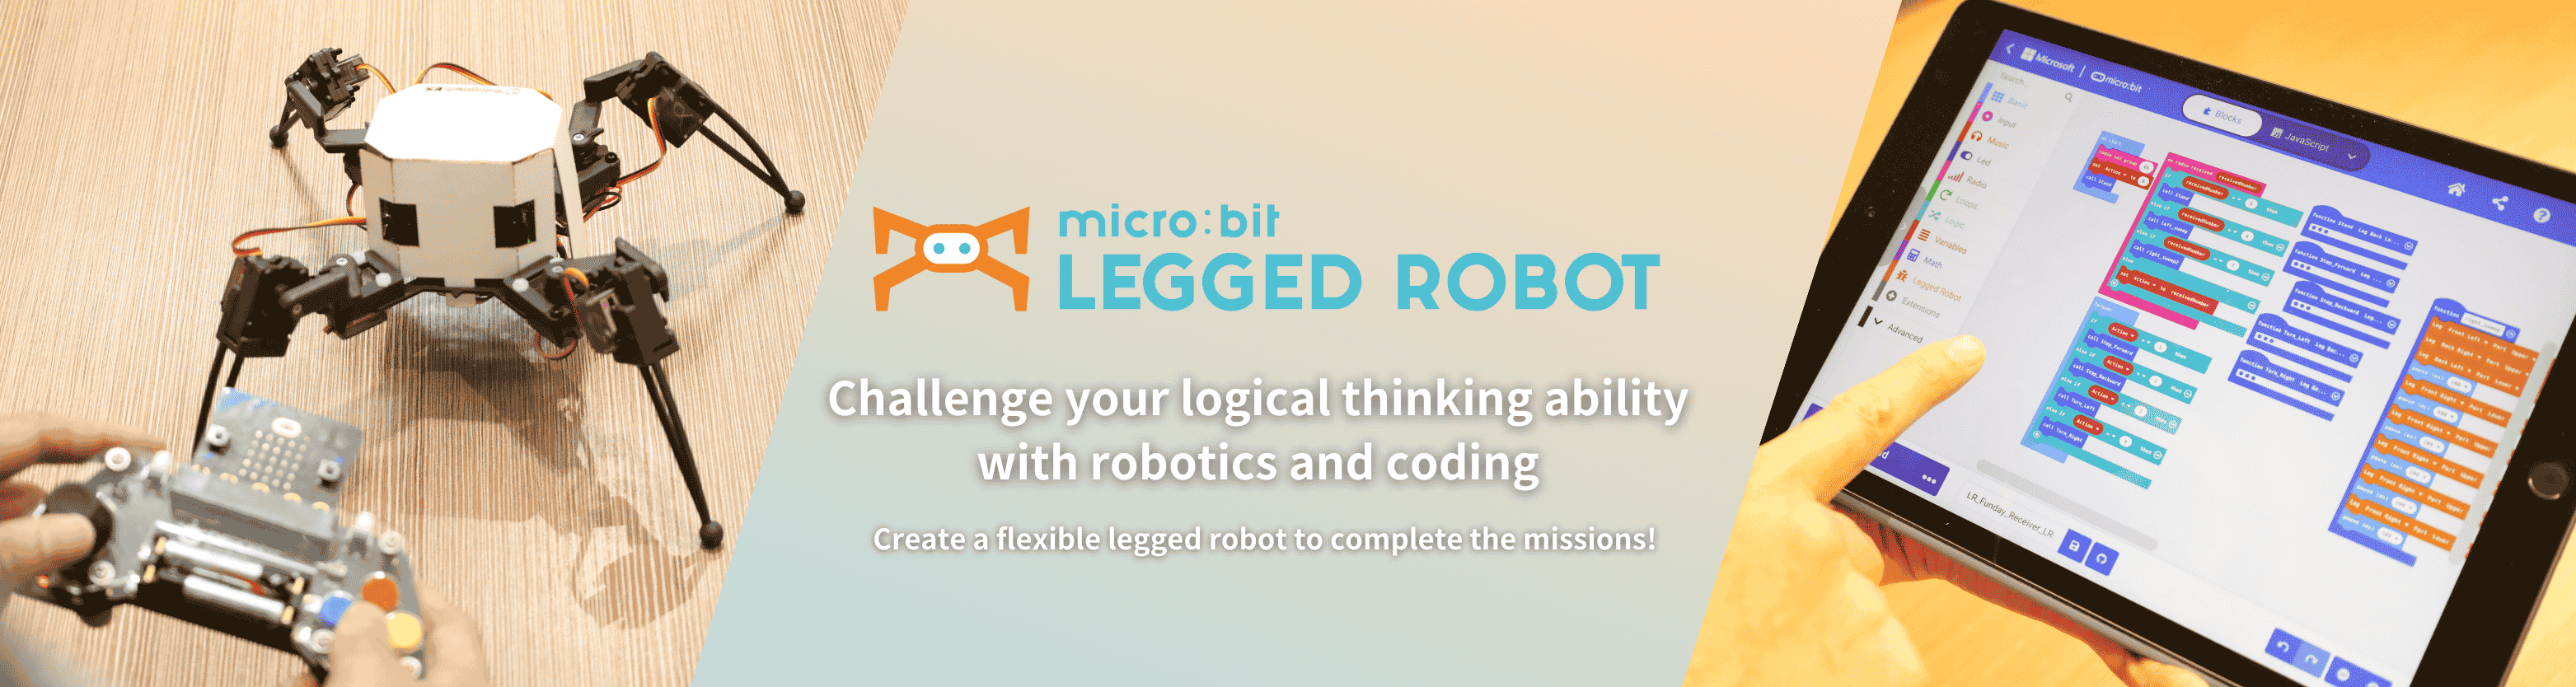 micro:bit Legged Robot